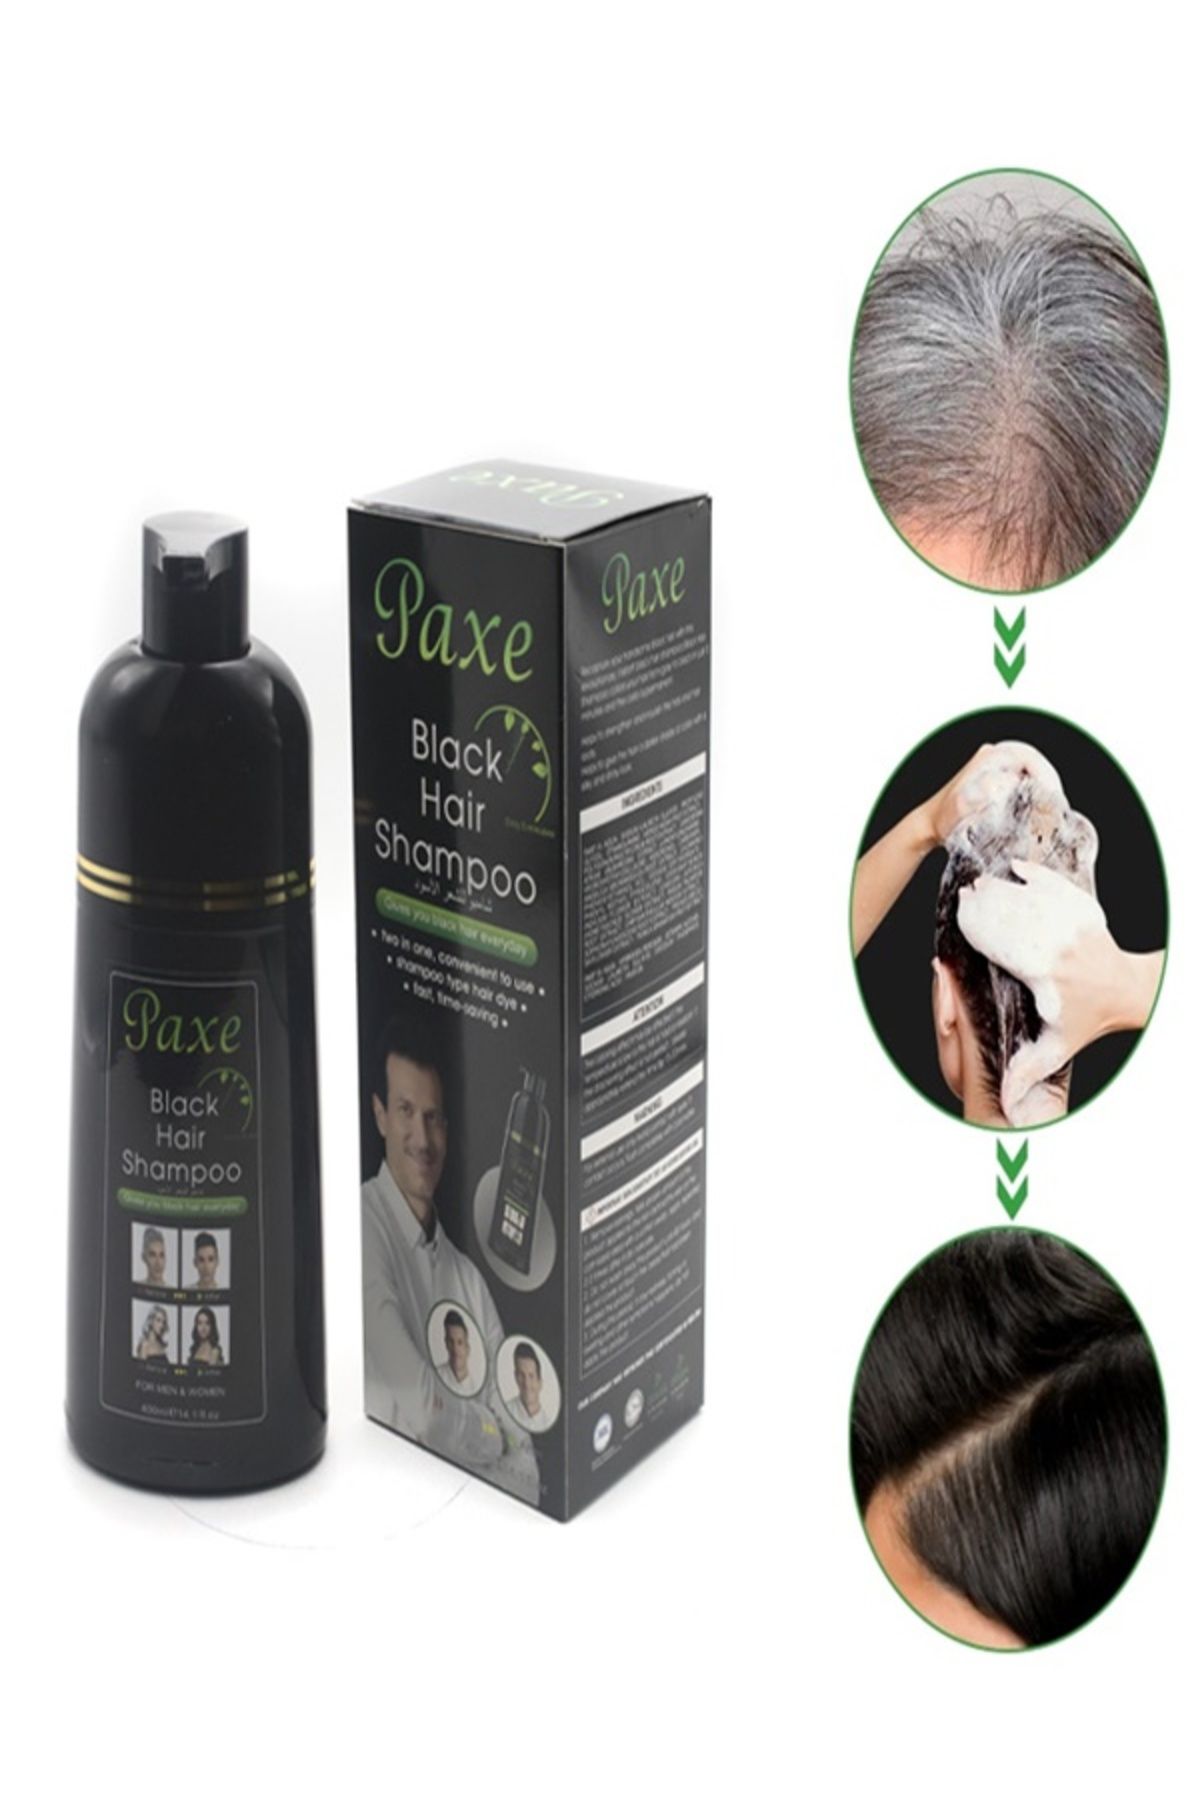 Paxe Black Hair Shampoo Beyaz Saç Kapatıcı Şampuan Siyah Renk 400ML